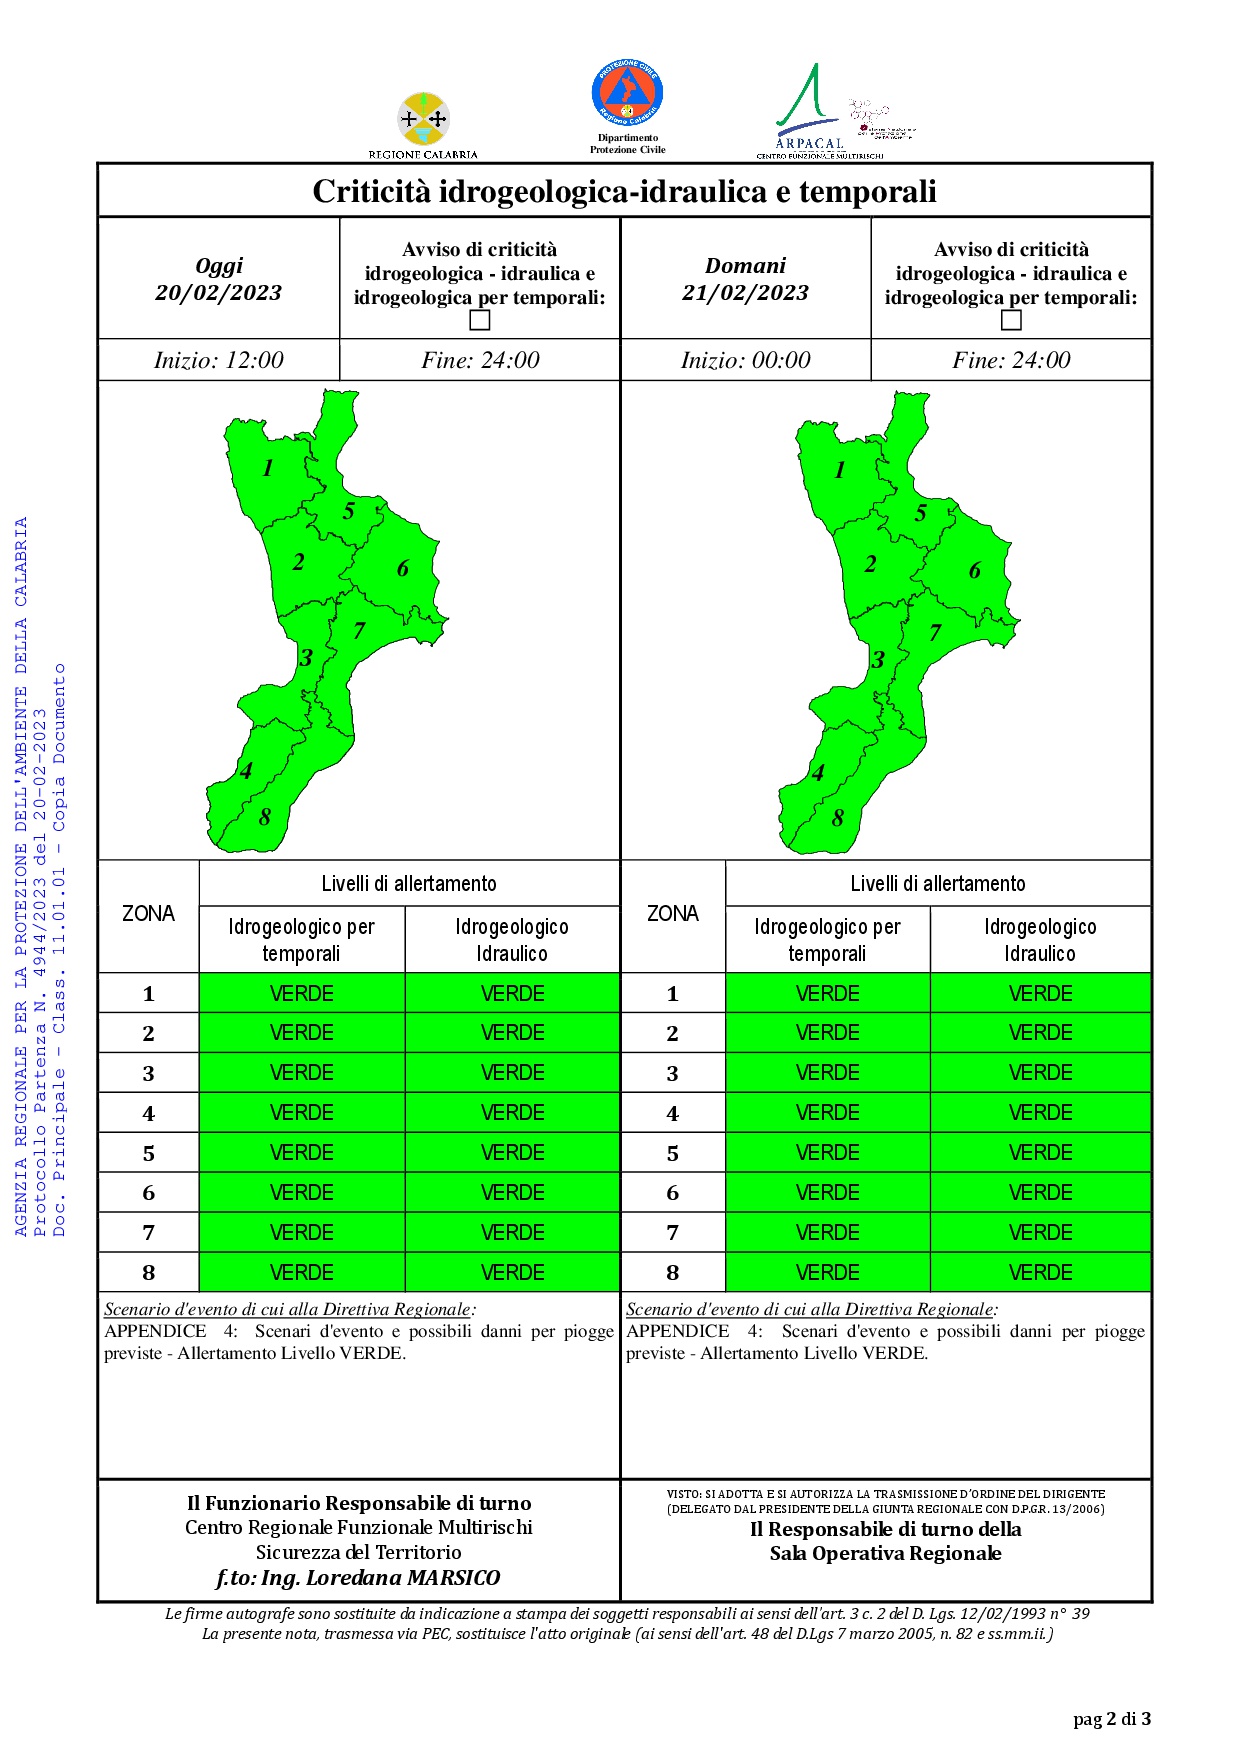 Criticità idrogeologica-idraulica e temporali in Calabria 20-02-2023